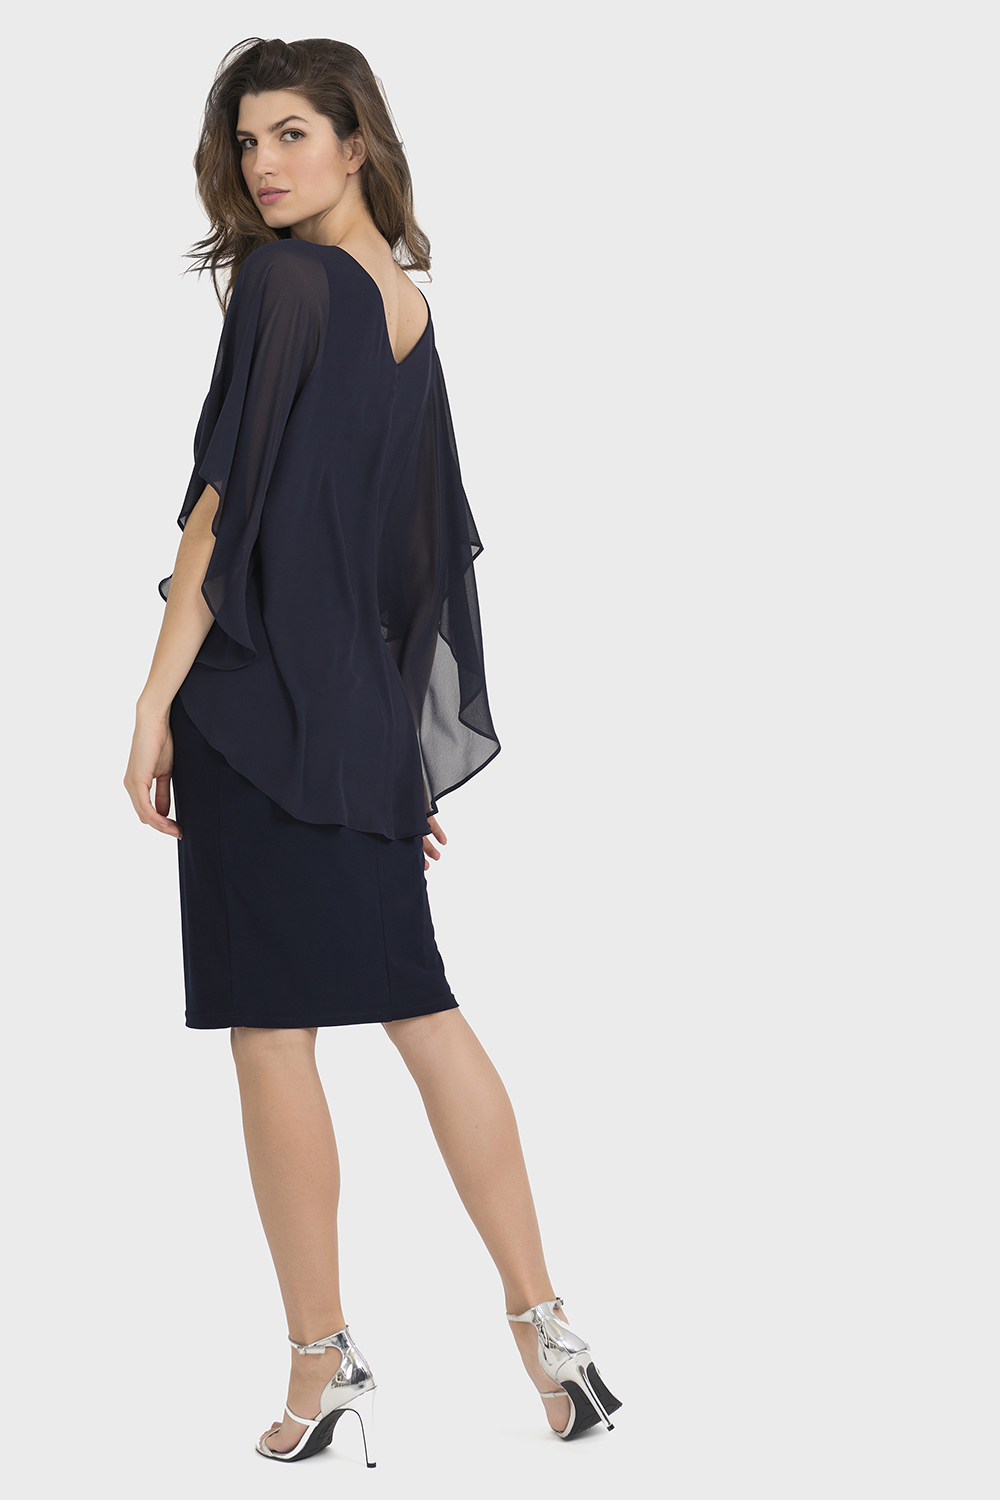 JOSEPH RIBKOFF BLUE DRESS | Rosella - Style inspired by elegance